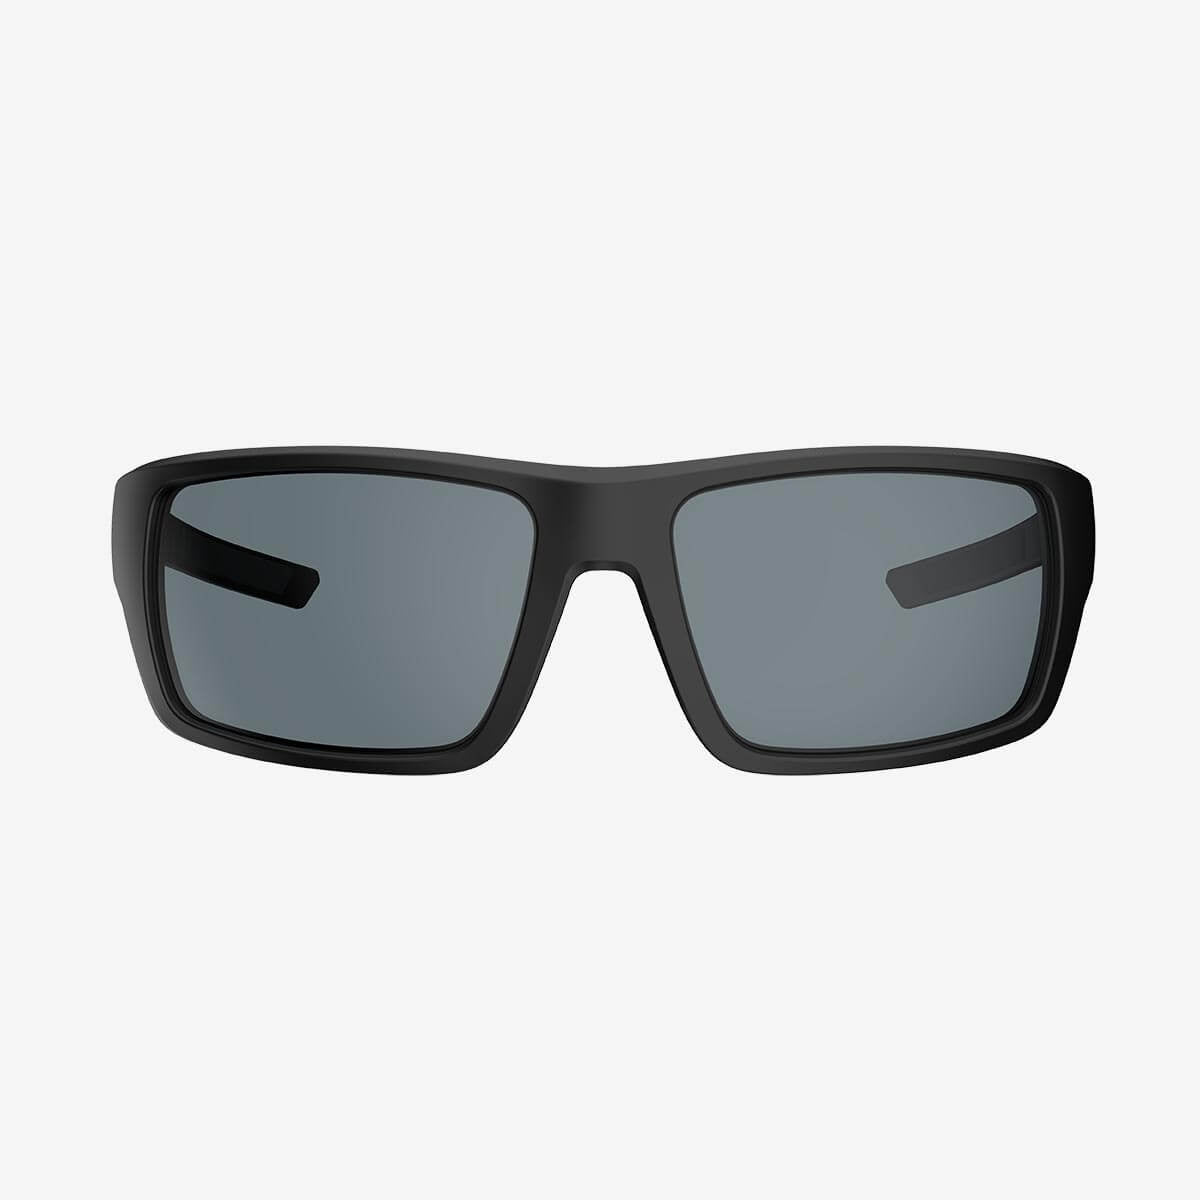 Magpul - Apex Eyewear - Black Frame, Gray Lens